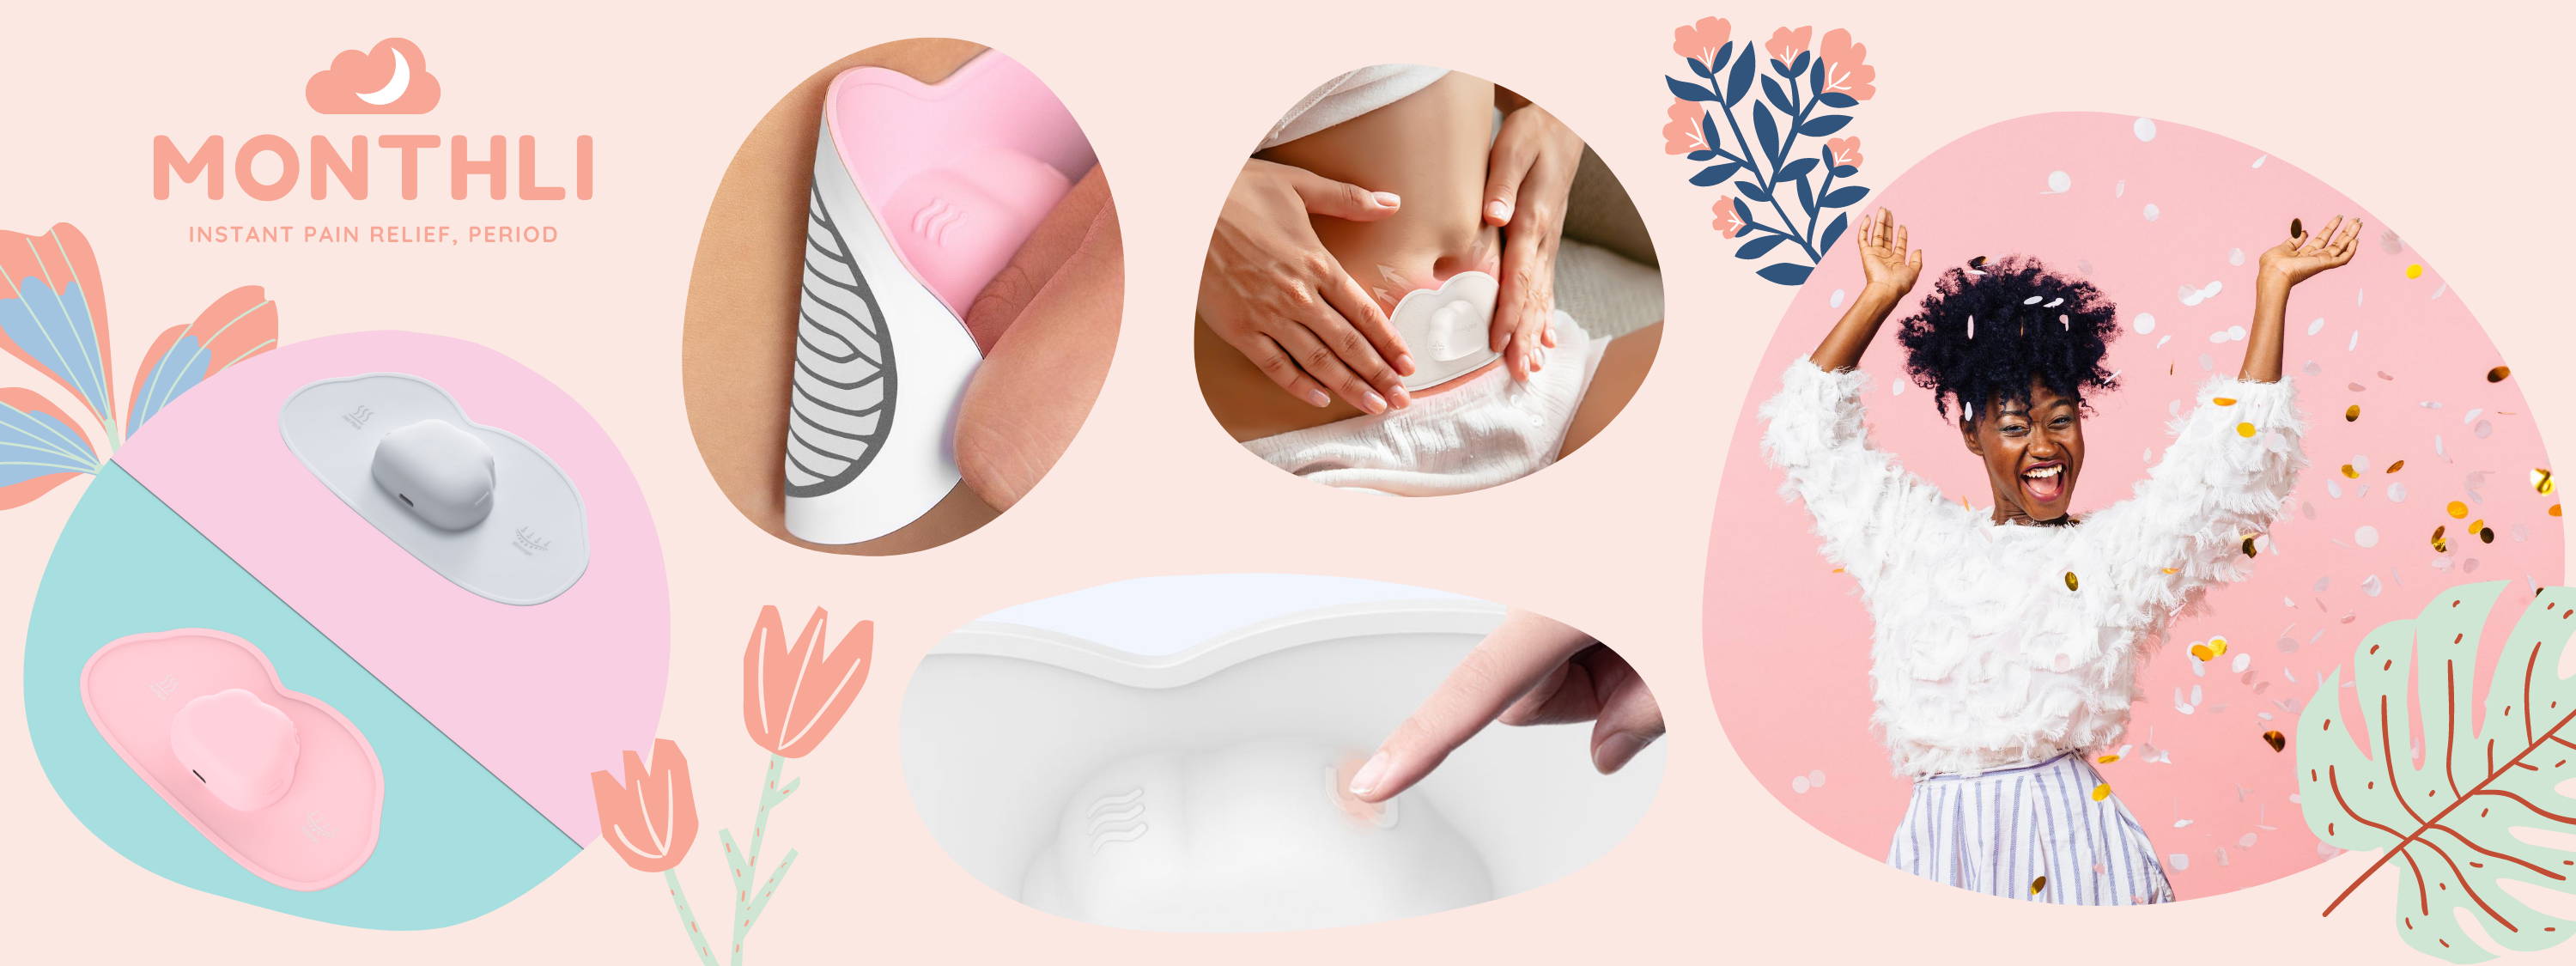 monthli Instant Period Pain Relief Device, best menstrual cramp relief, period cramp treatment, natural pain relief for cramps, period cramp cure